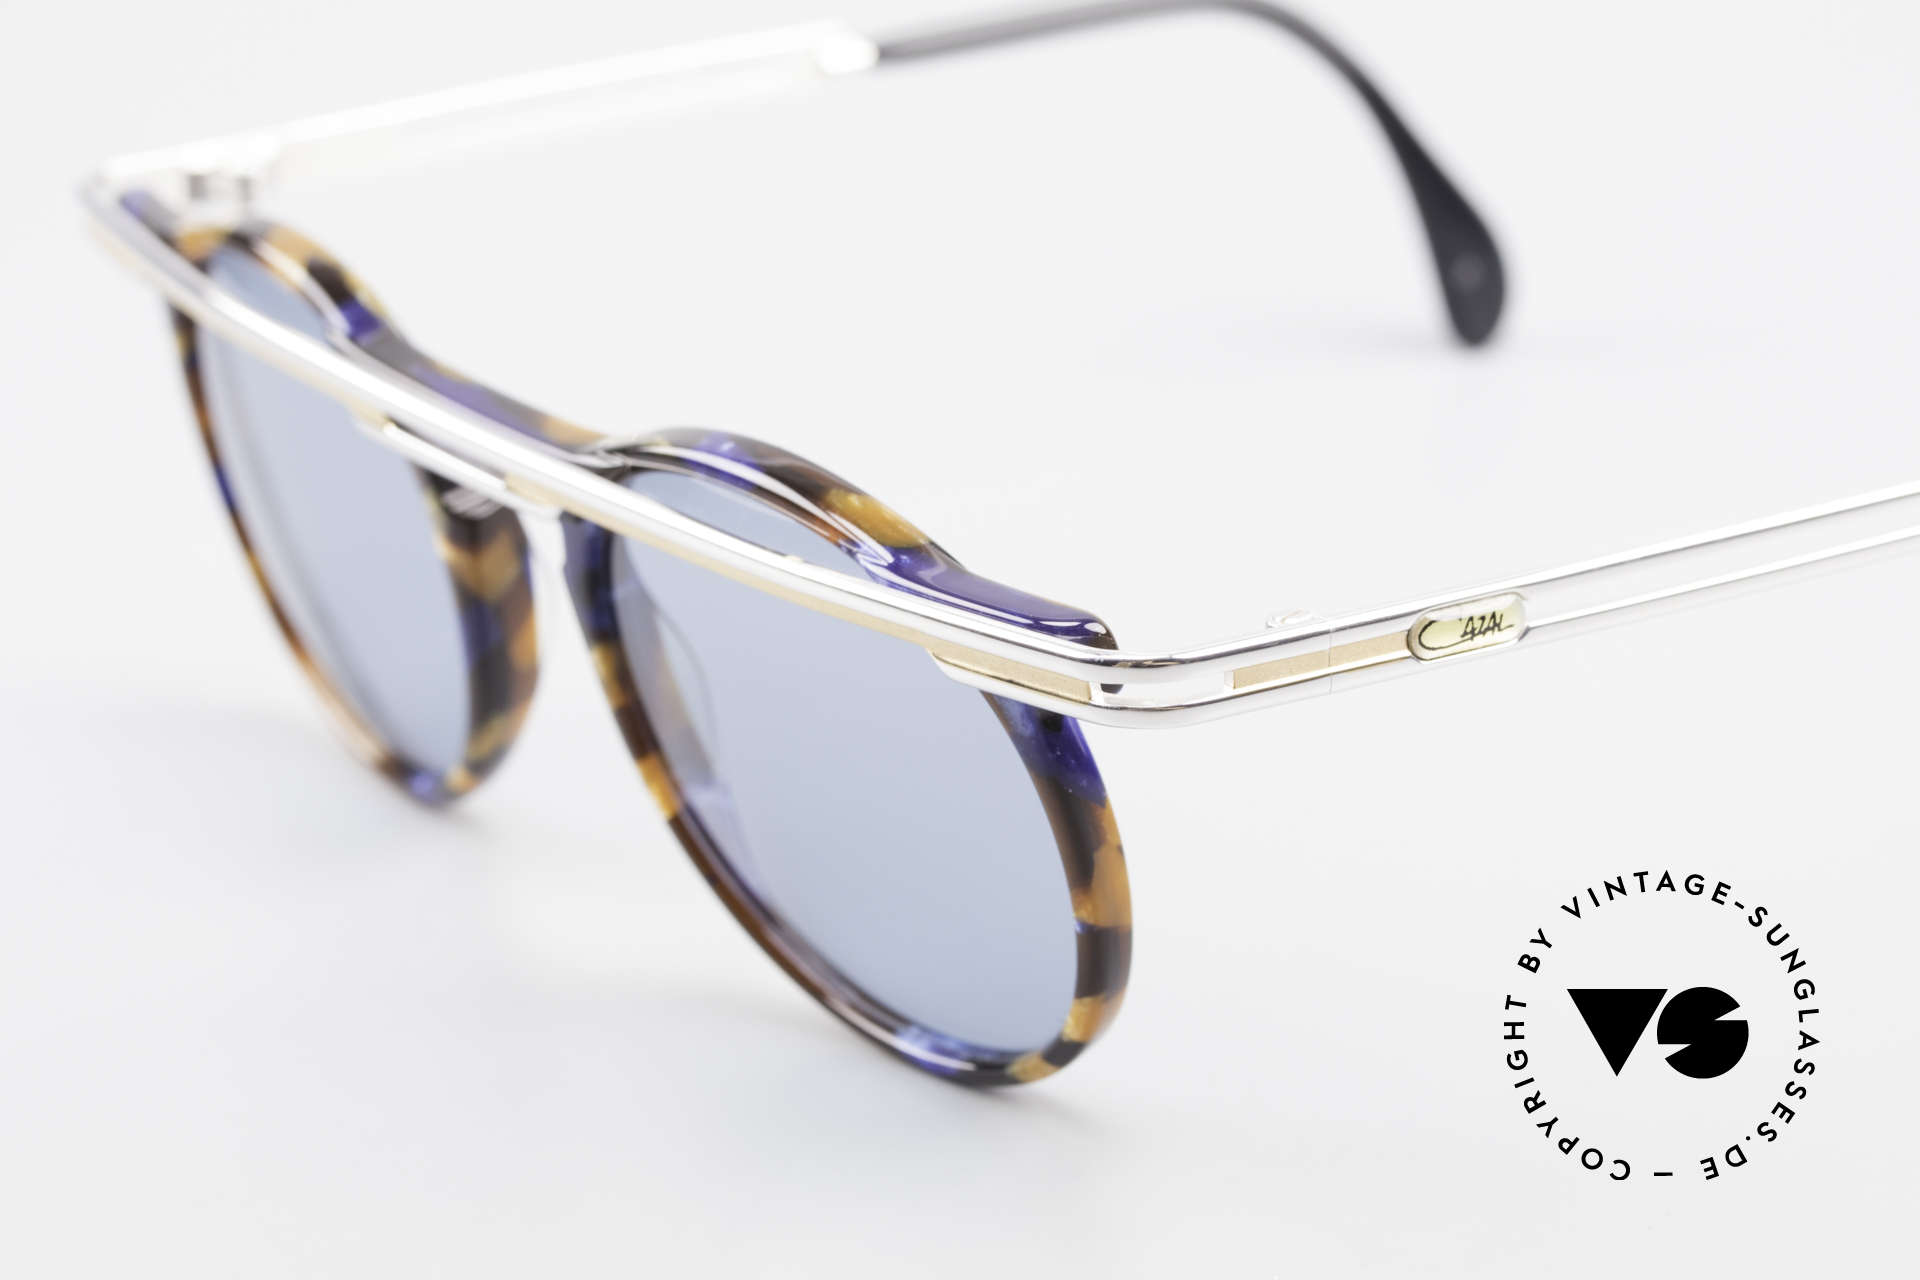 Cazal 648 Old Cari Zalloni Sunglasses, a true 90's masterpiece - just precious and distinctive, Made for Men and Women